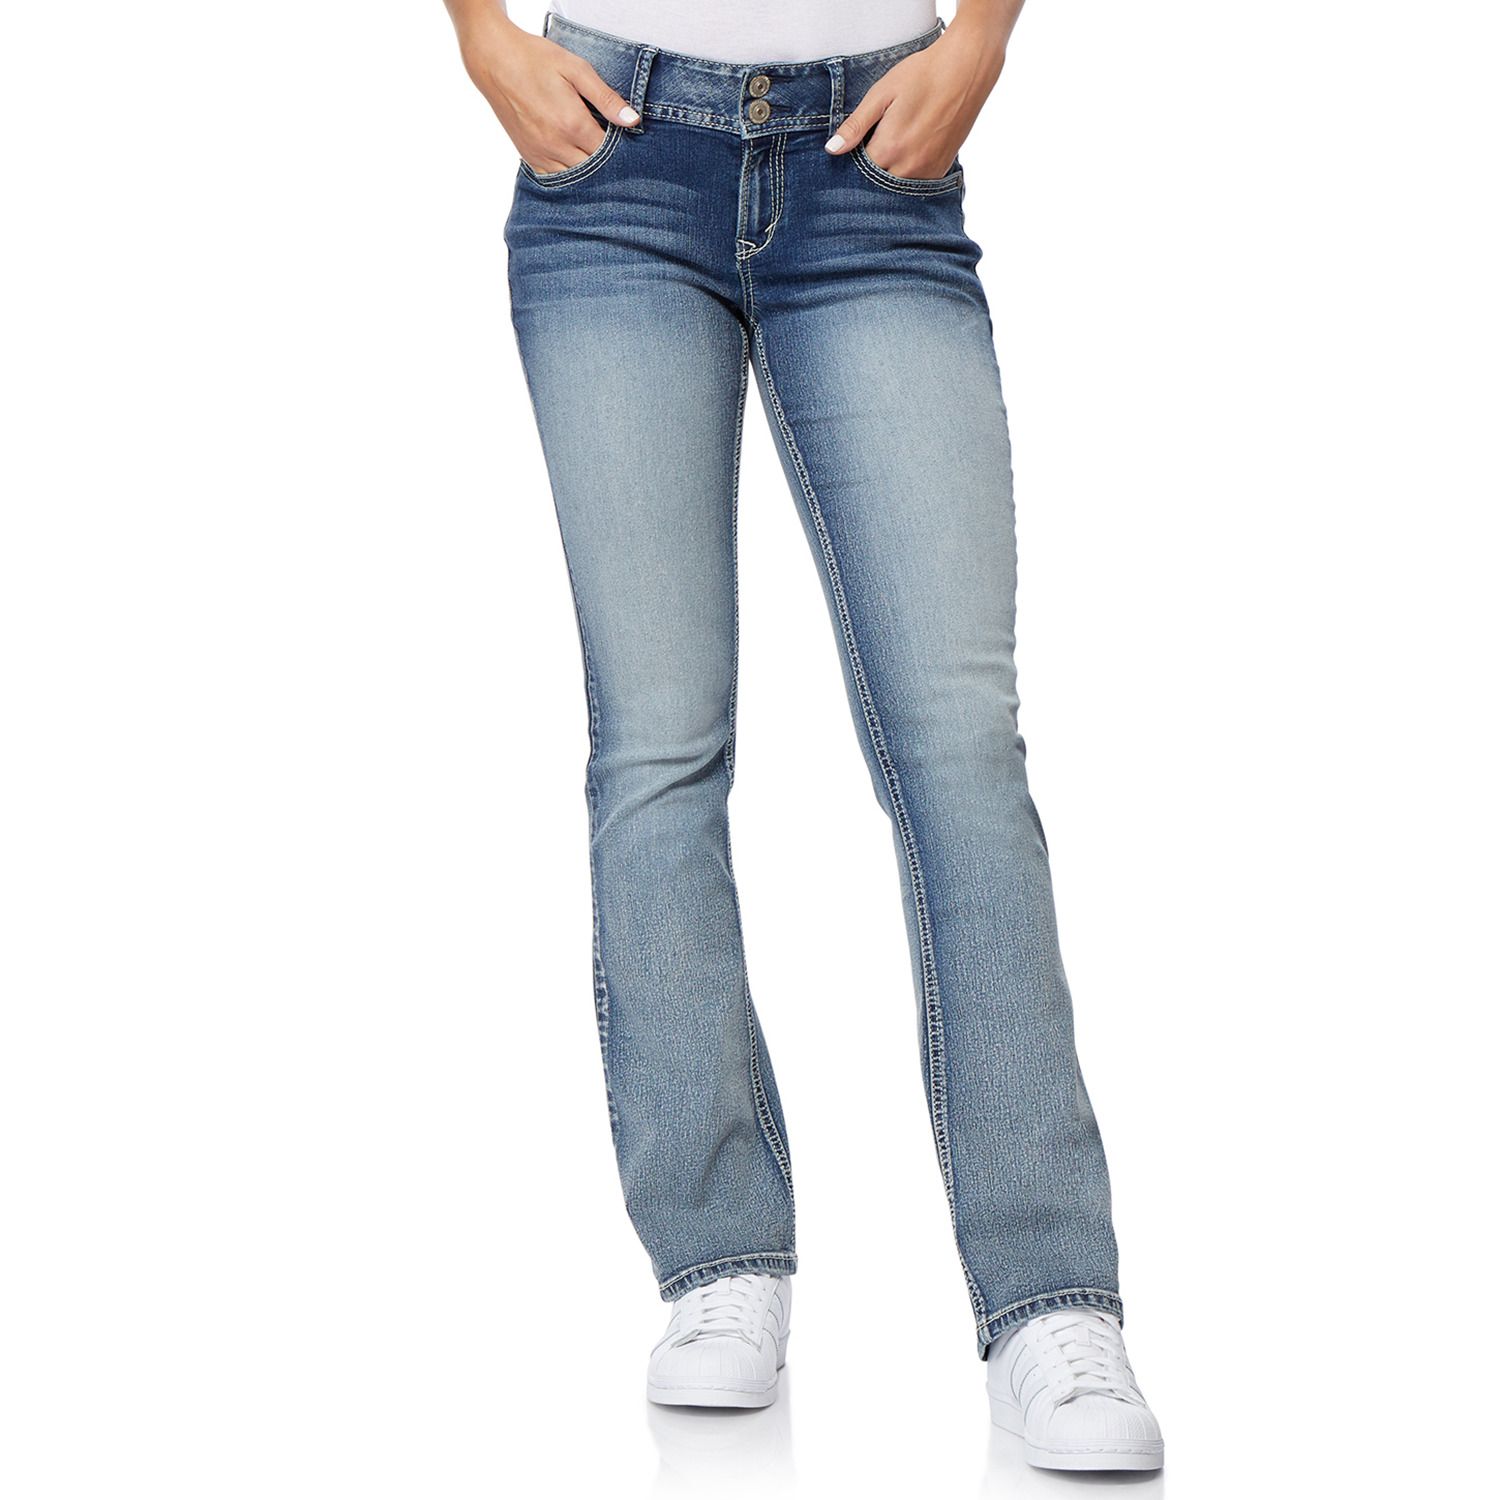 wallflower luscious curvy bootcut jeans